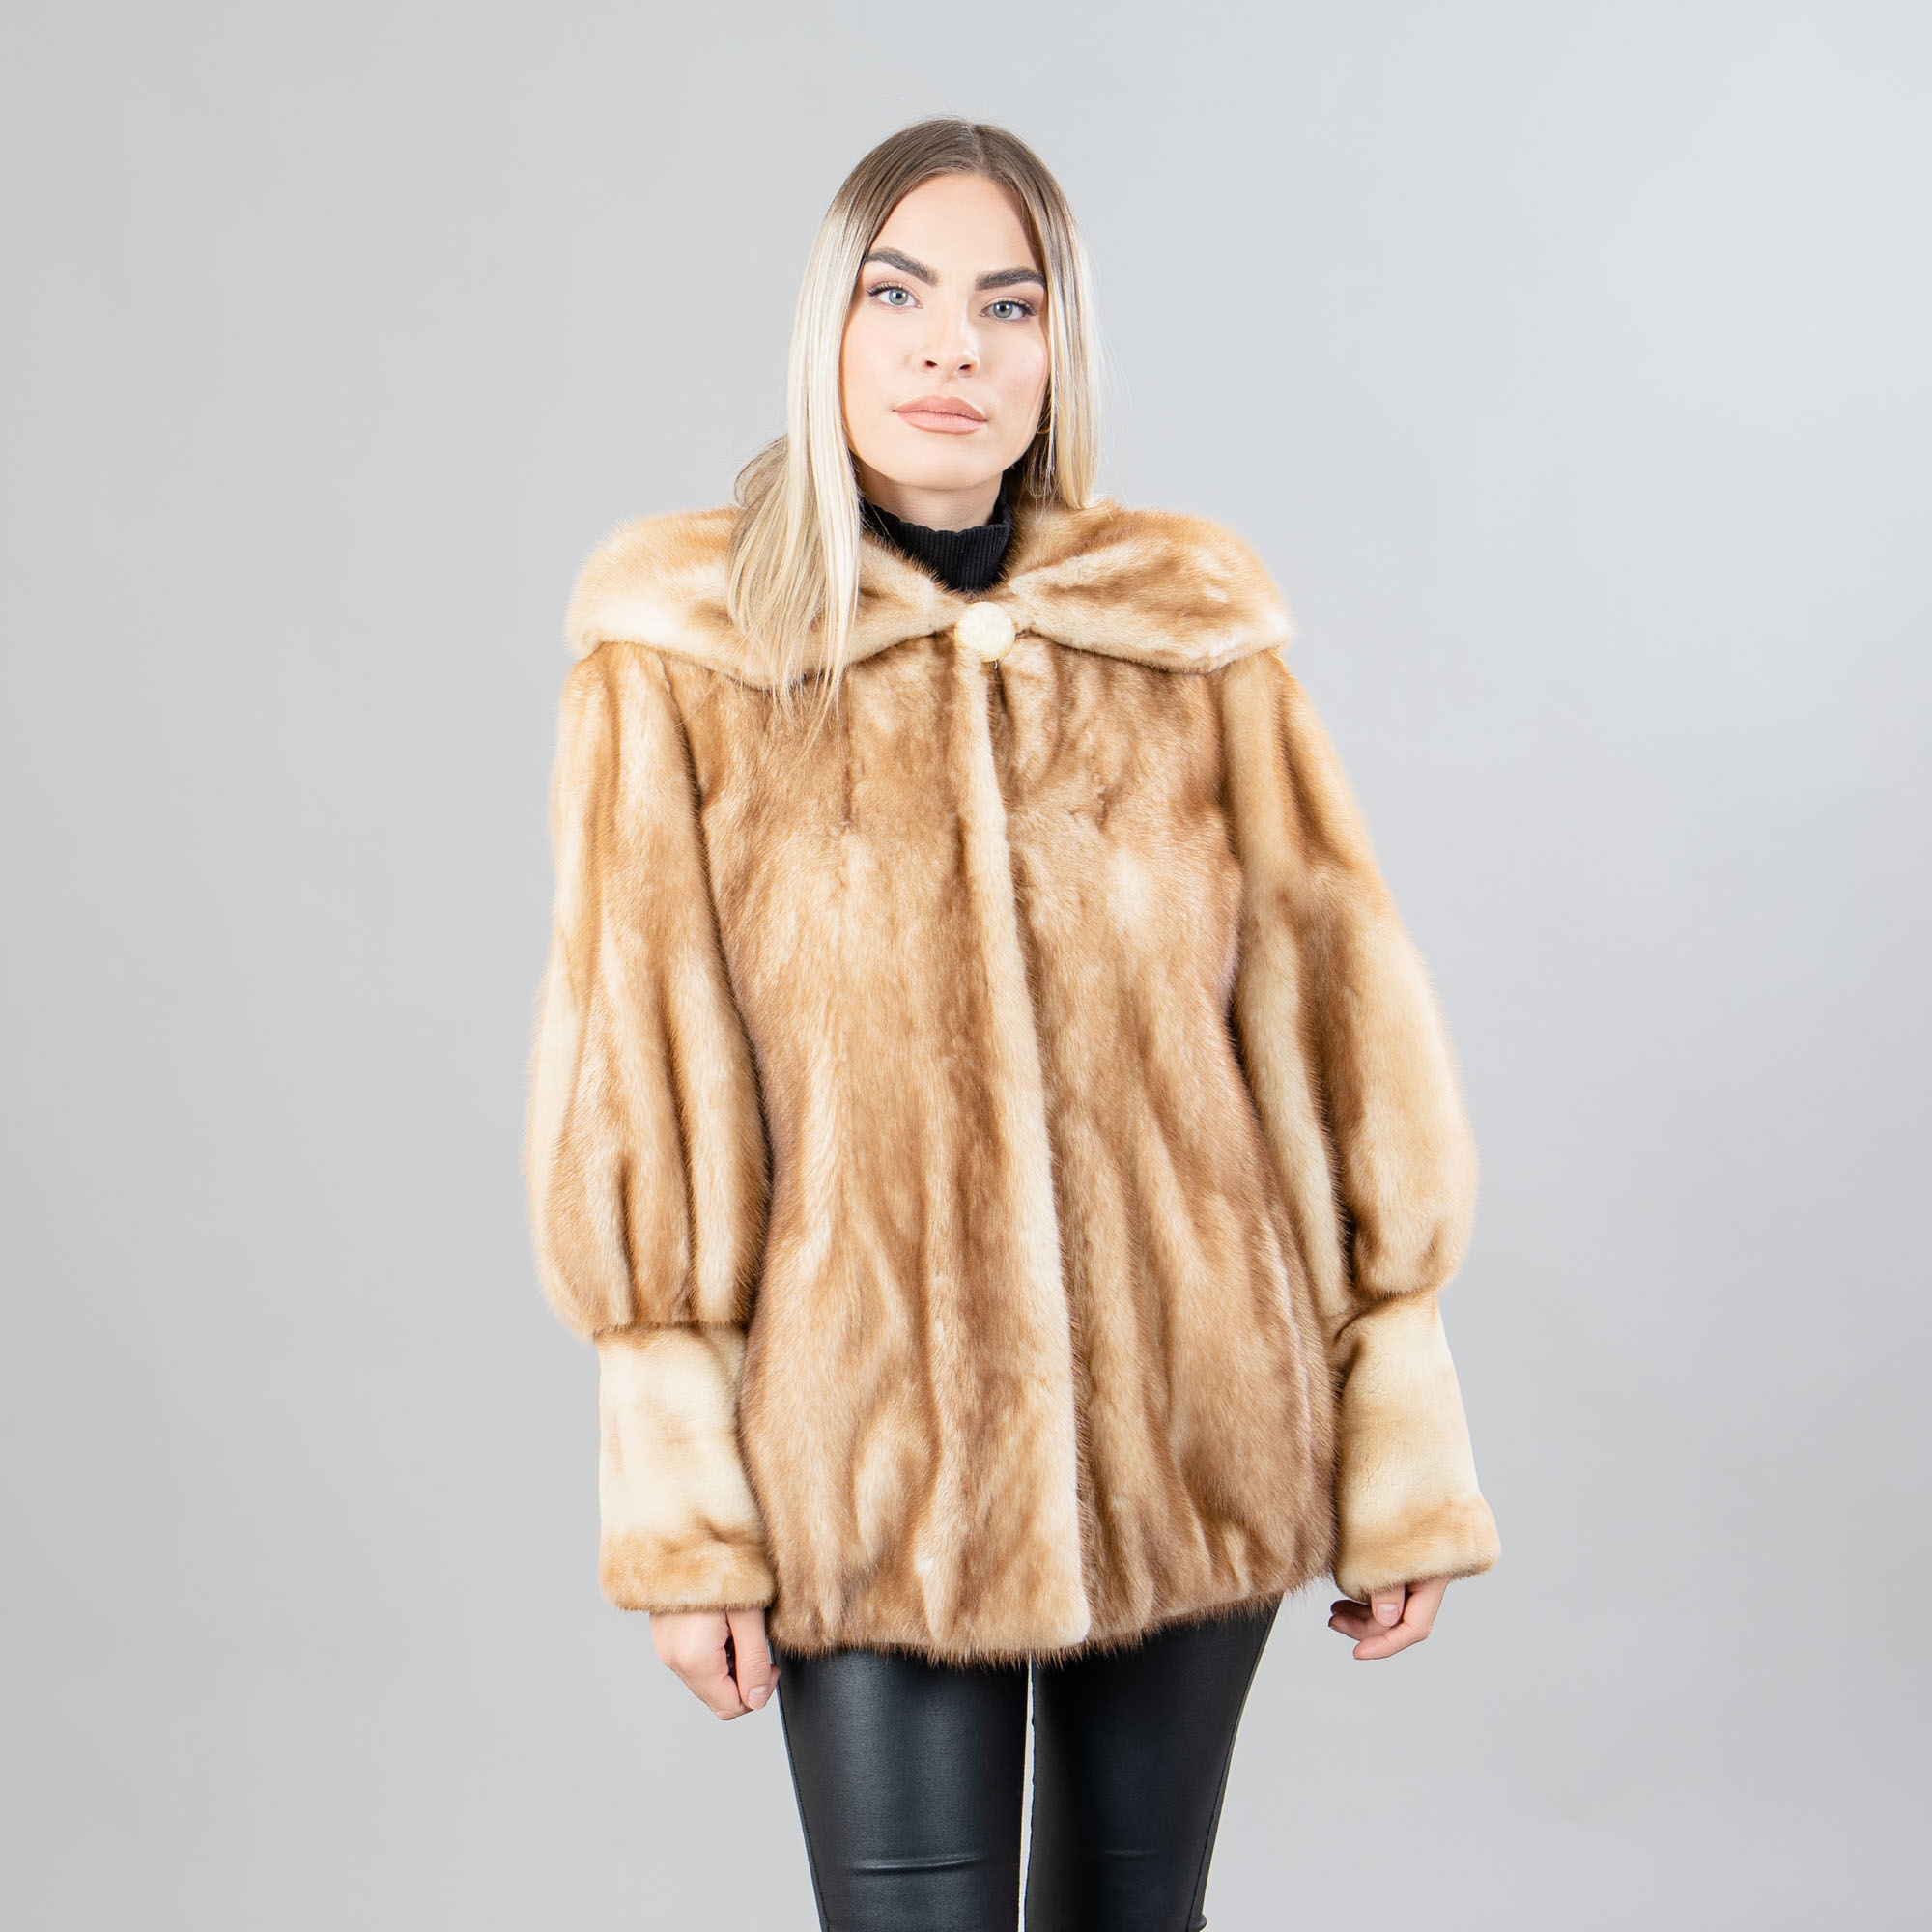 Mink fur jacket with a hood in beige color